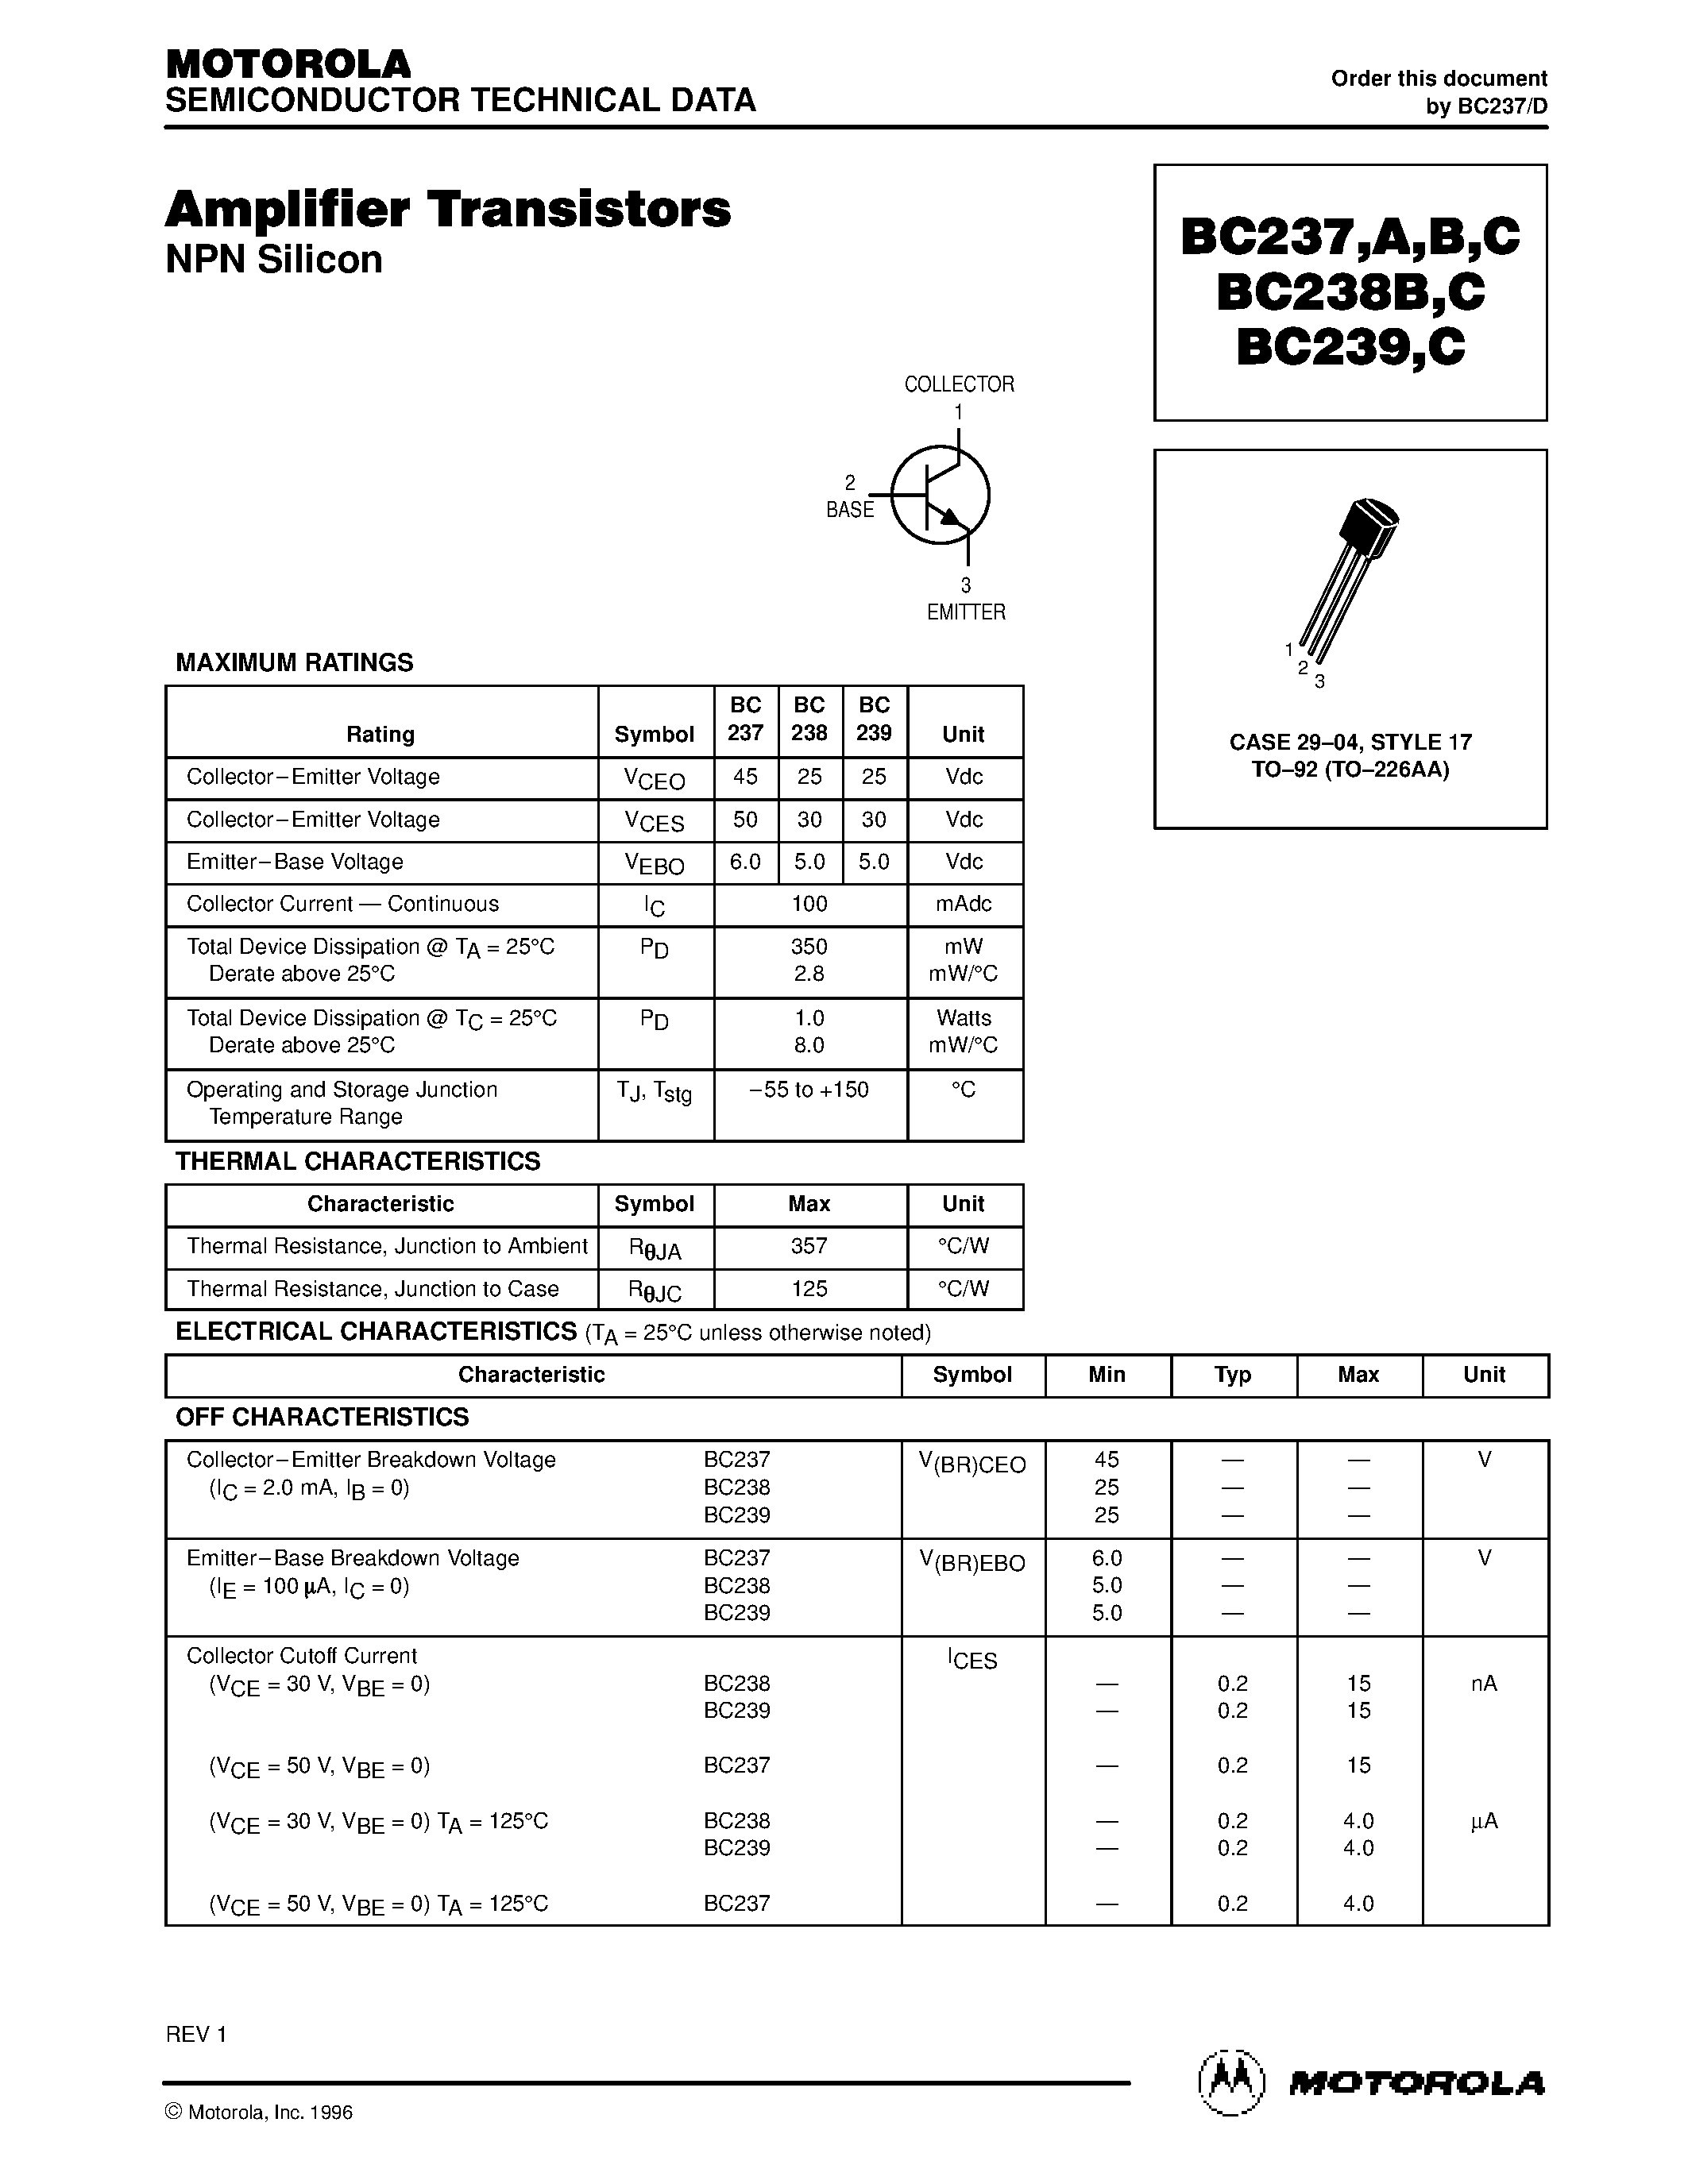 Datasheet BC239C - Amplifier Transistors page 1